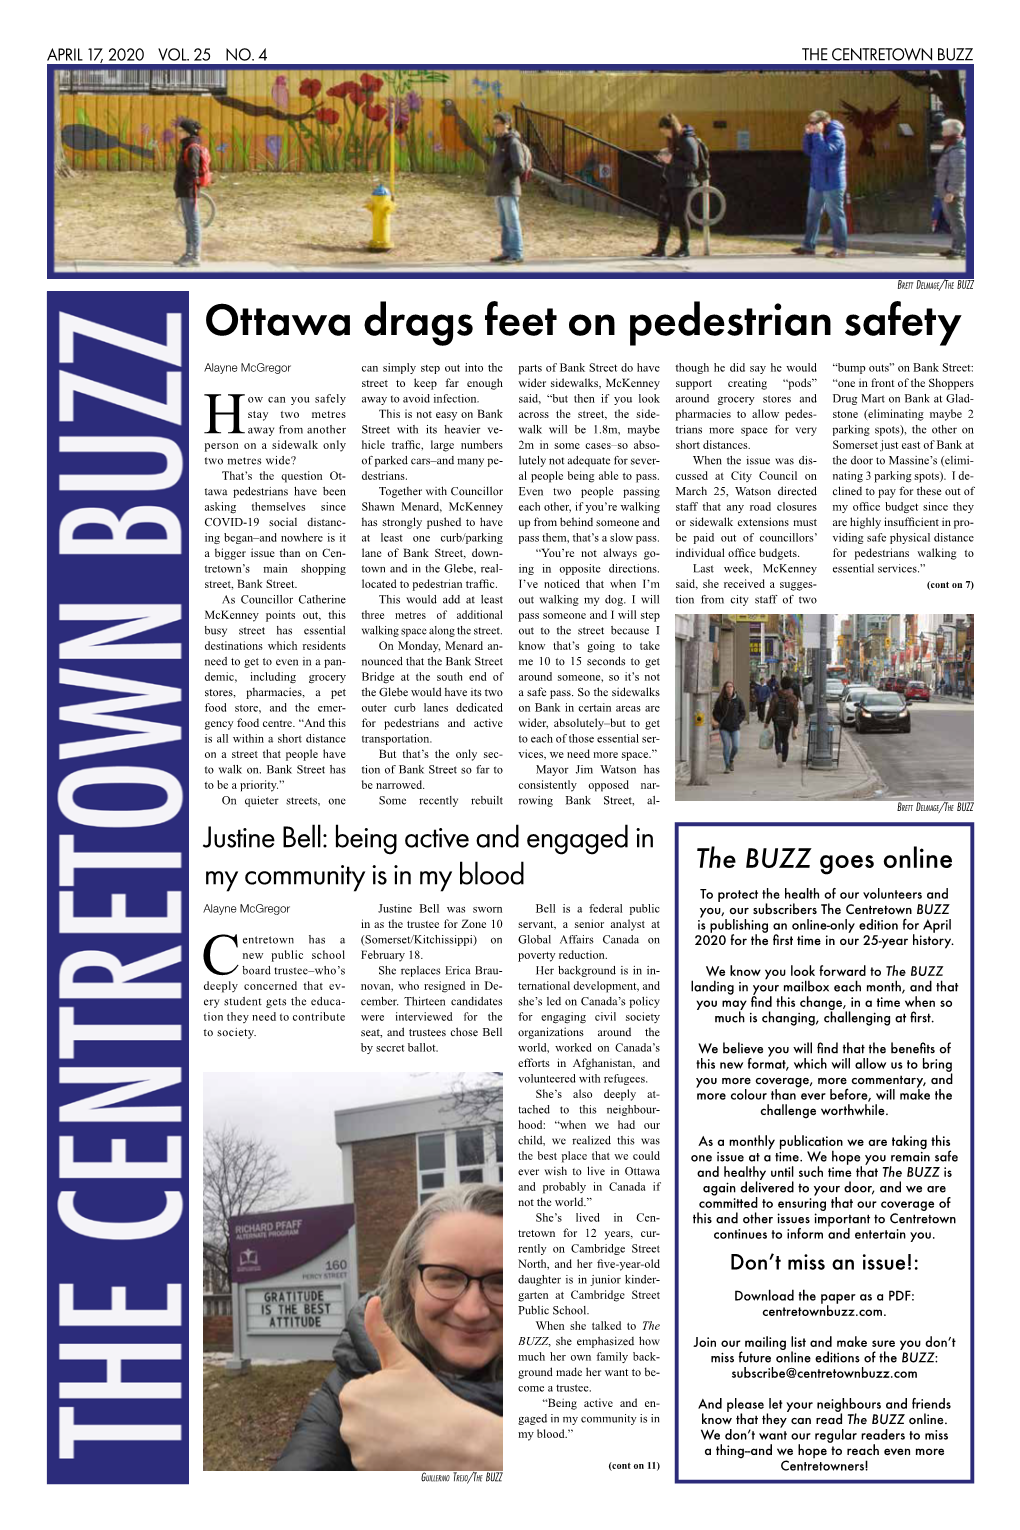 Ottawa Drags Feet on Pedestrian Safety